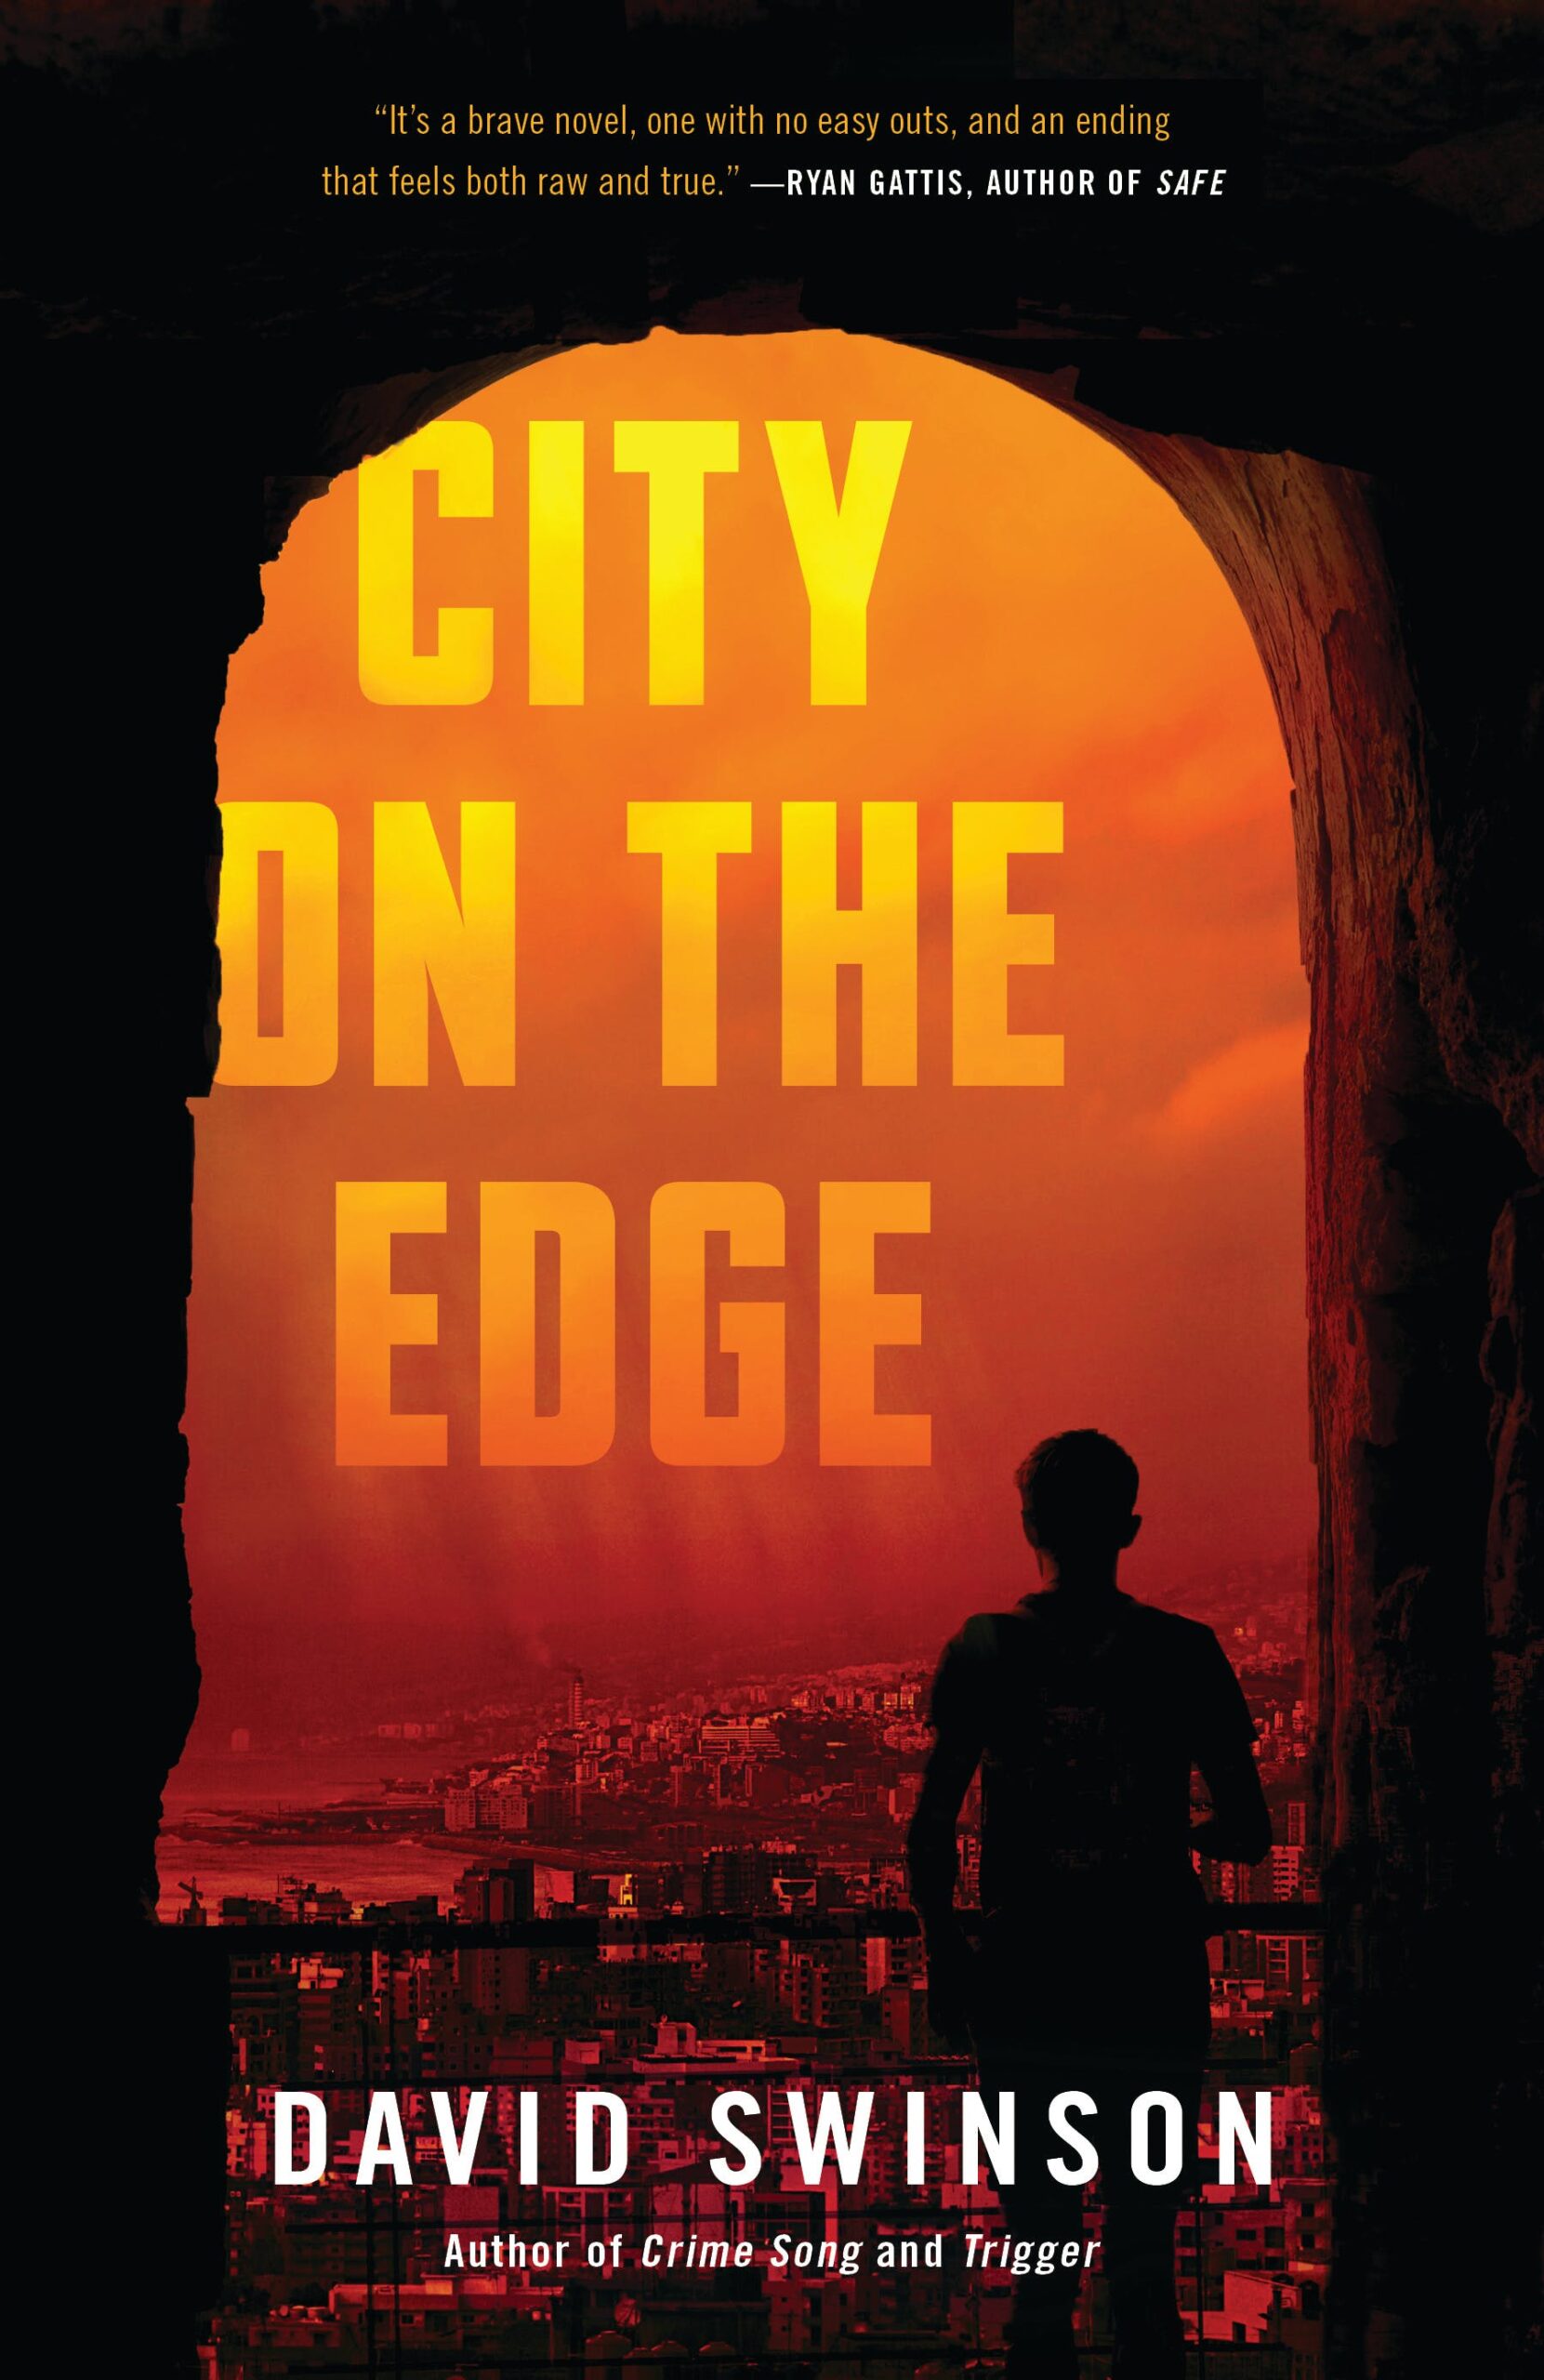 City on the Edge by David Swinson